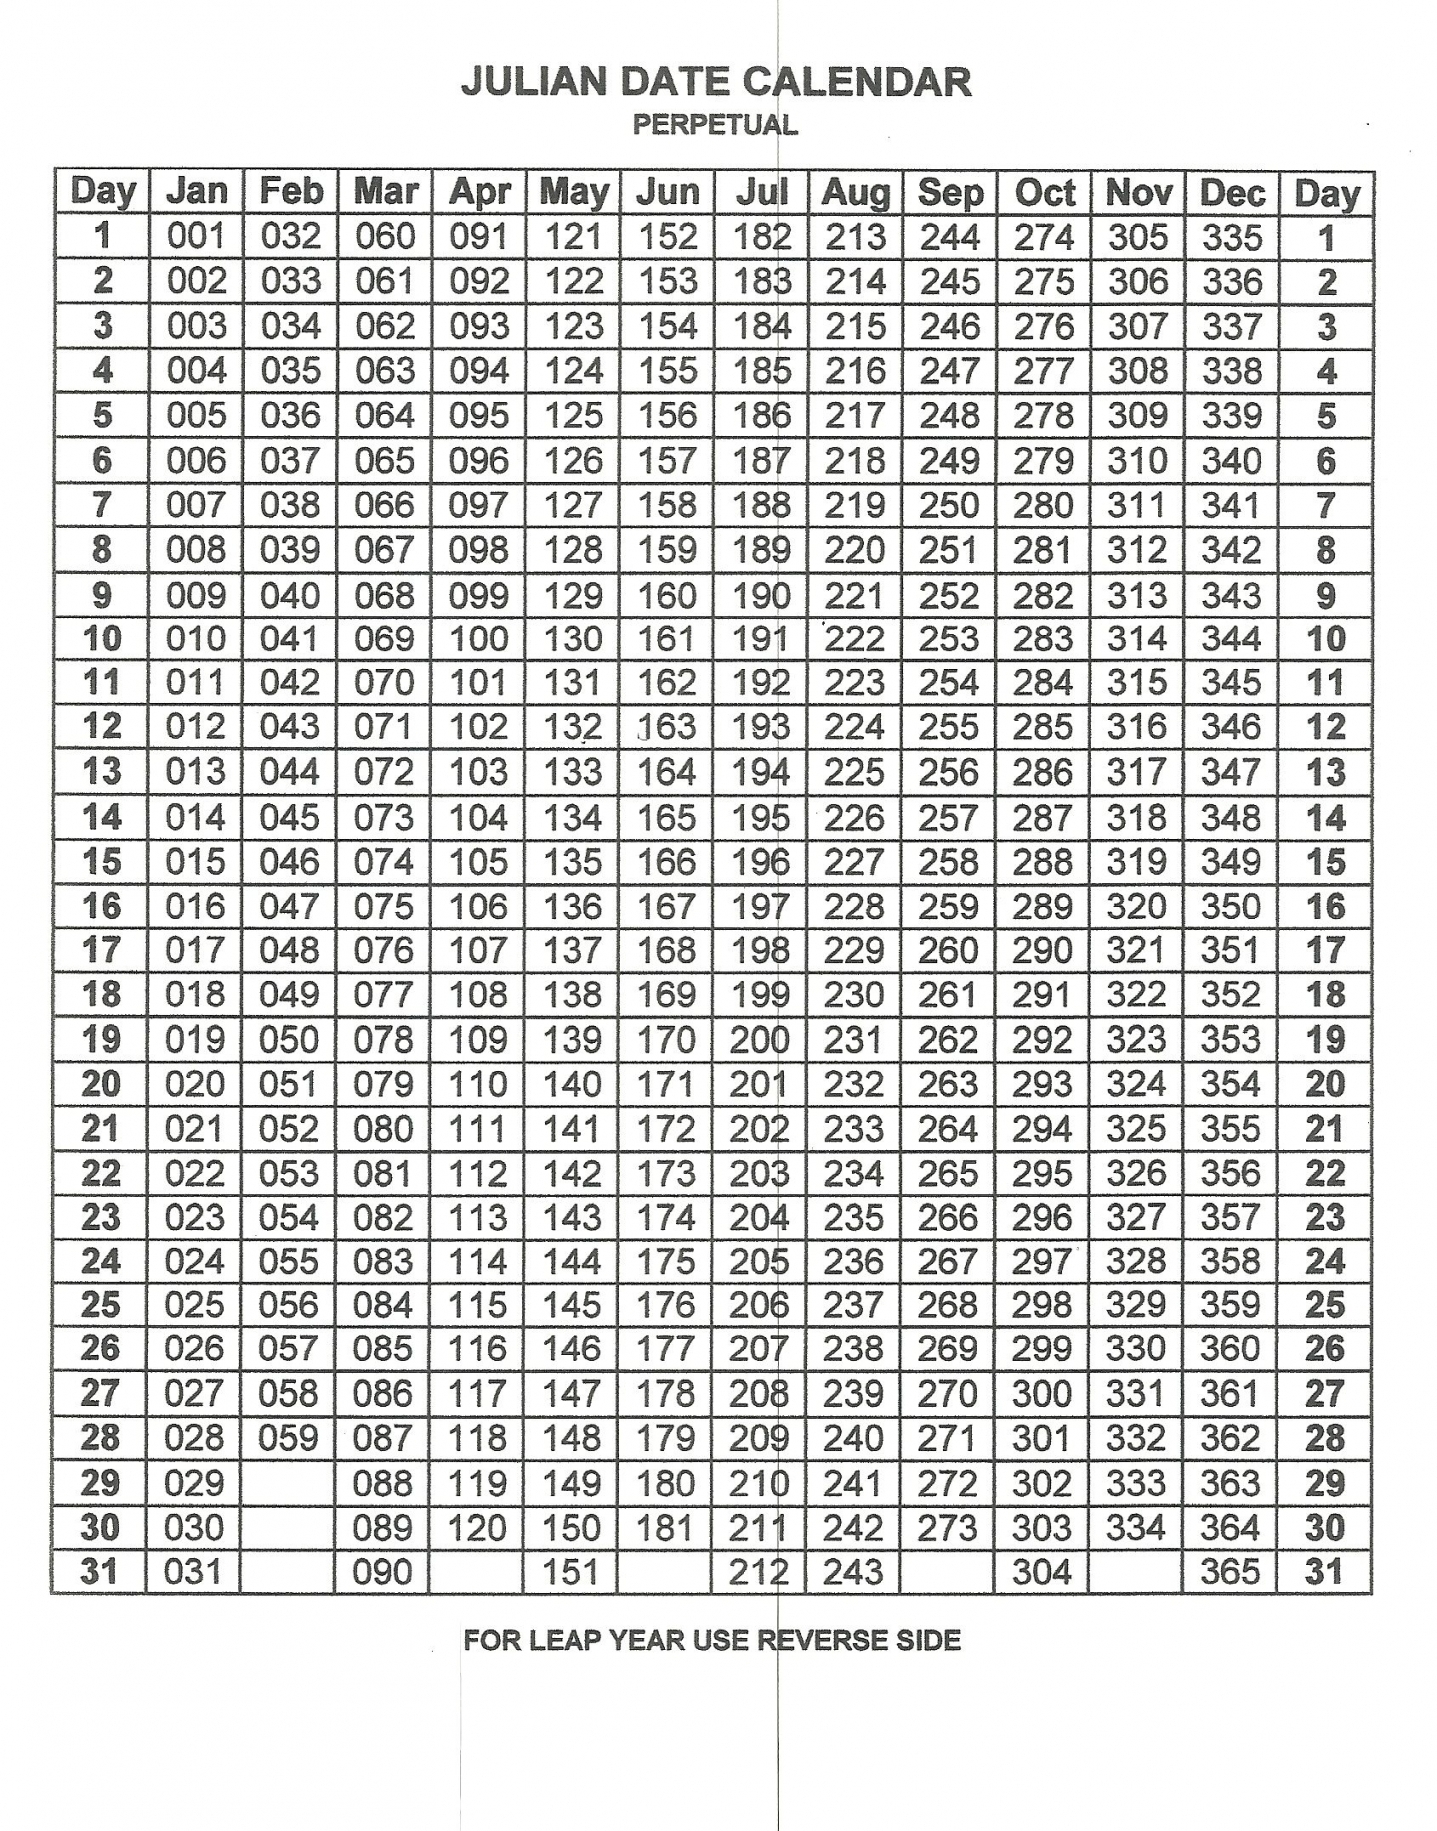 Printable 2021 Julian Calendar | Free Letter Templates within Perpetual Julian Date Calendar